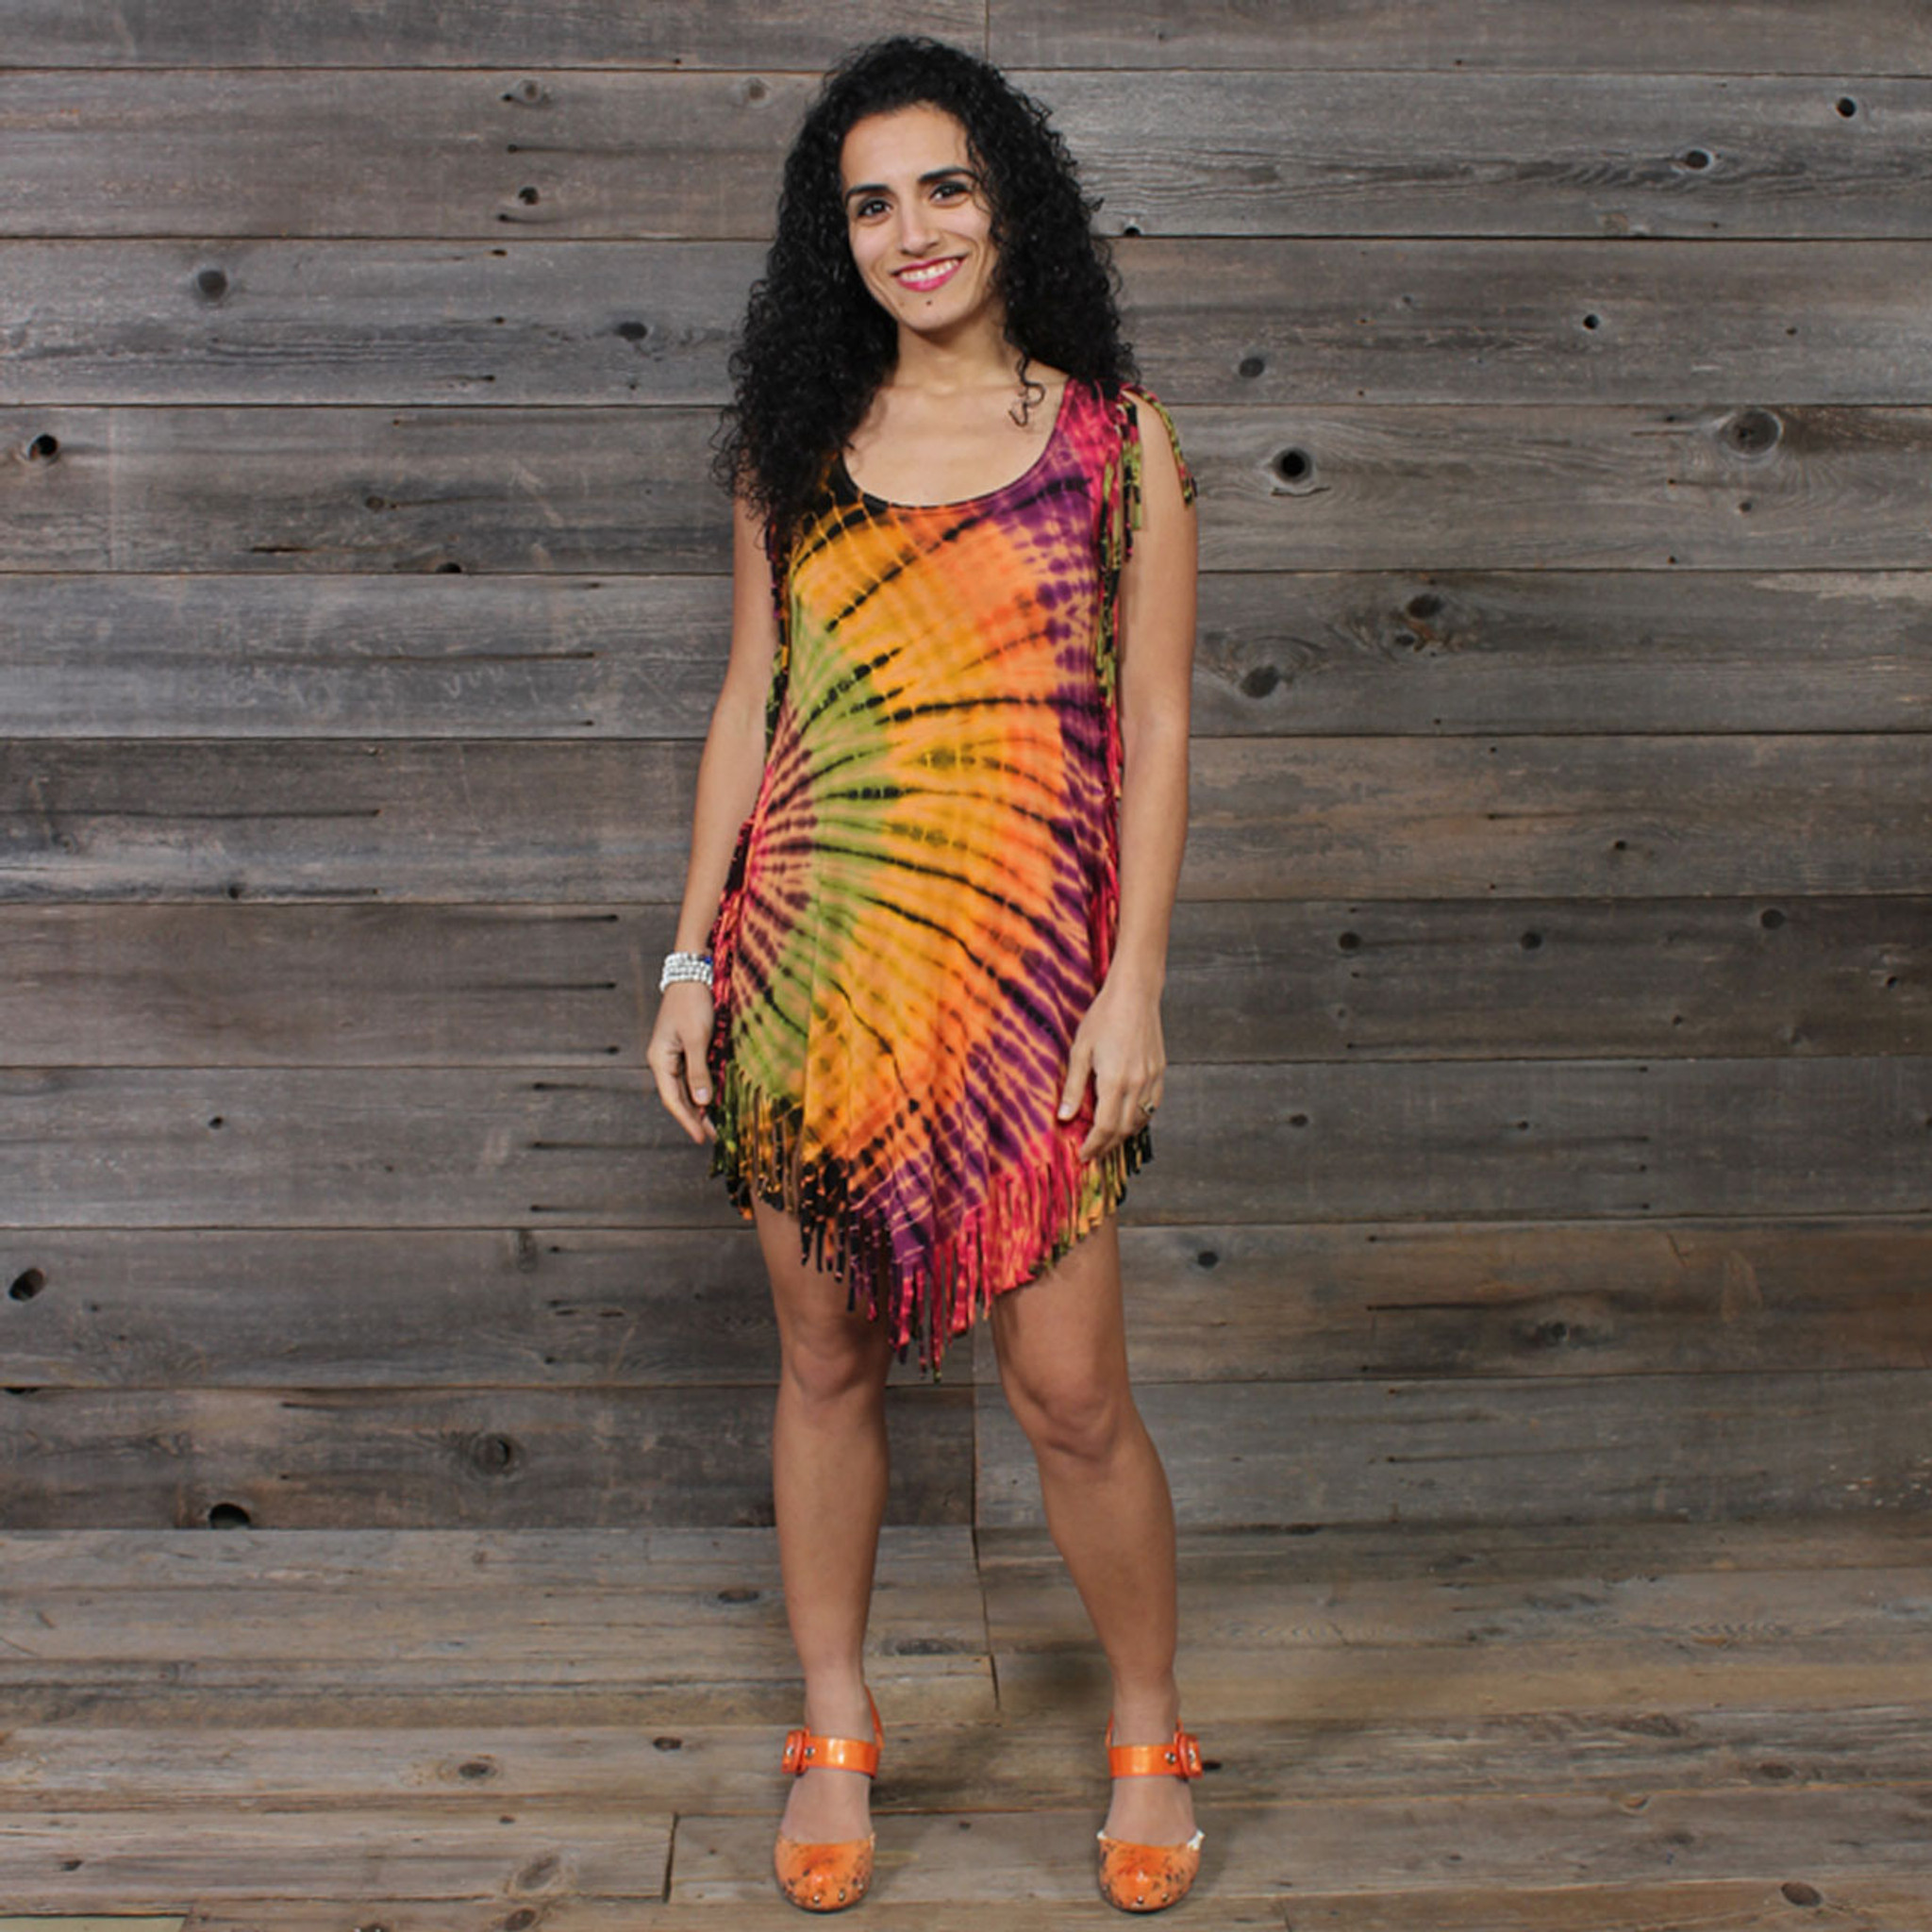 ORANGE SUNSHINE MINI DRESS Rayon Spandex Fringe Mini Dress Sunshine Rainbow Tie Dye